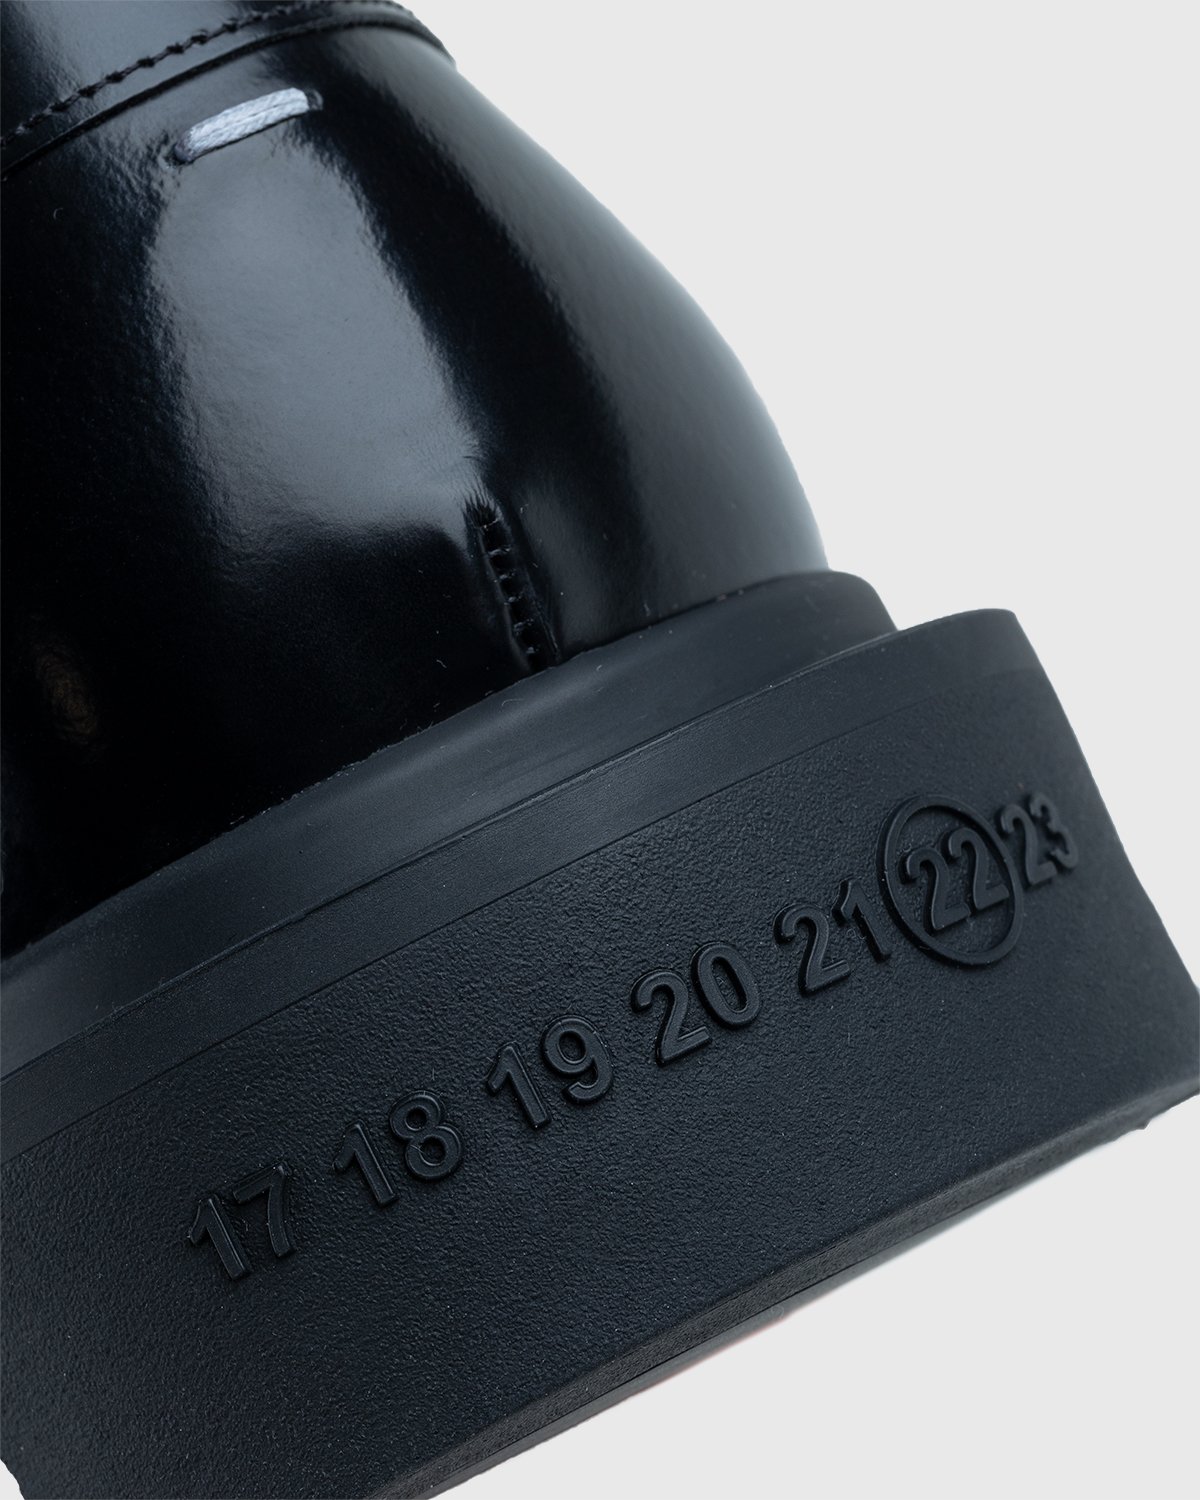 Maison Margiela - Leather Loafers Black - Footwear - Black - Image 5